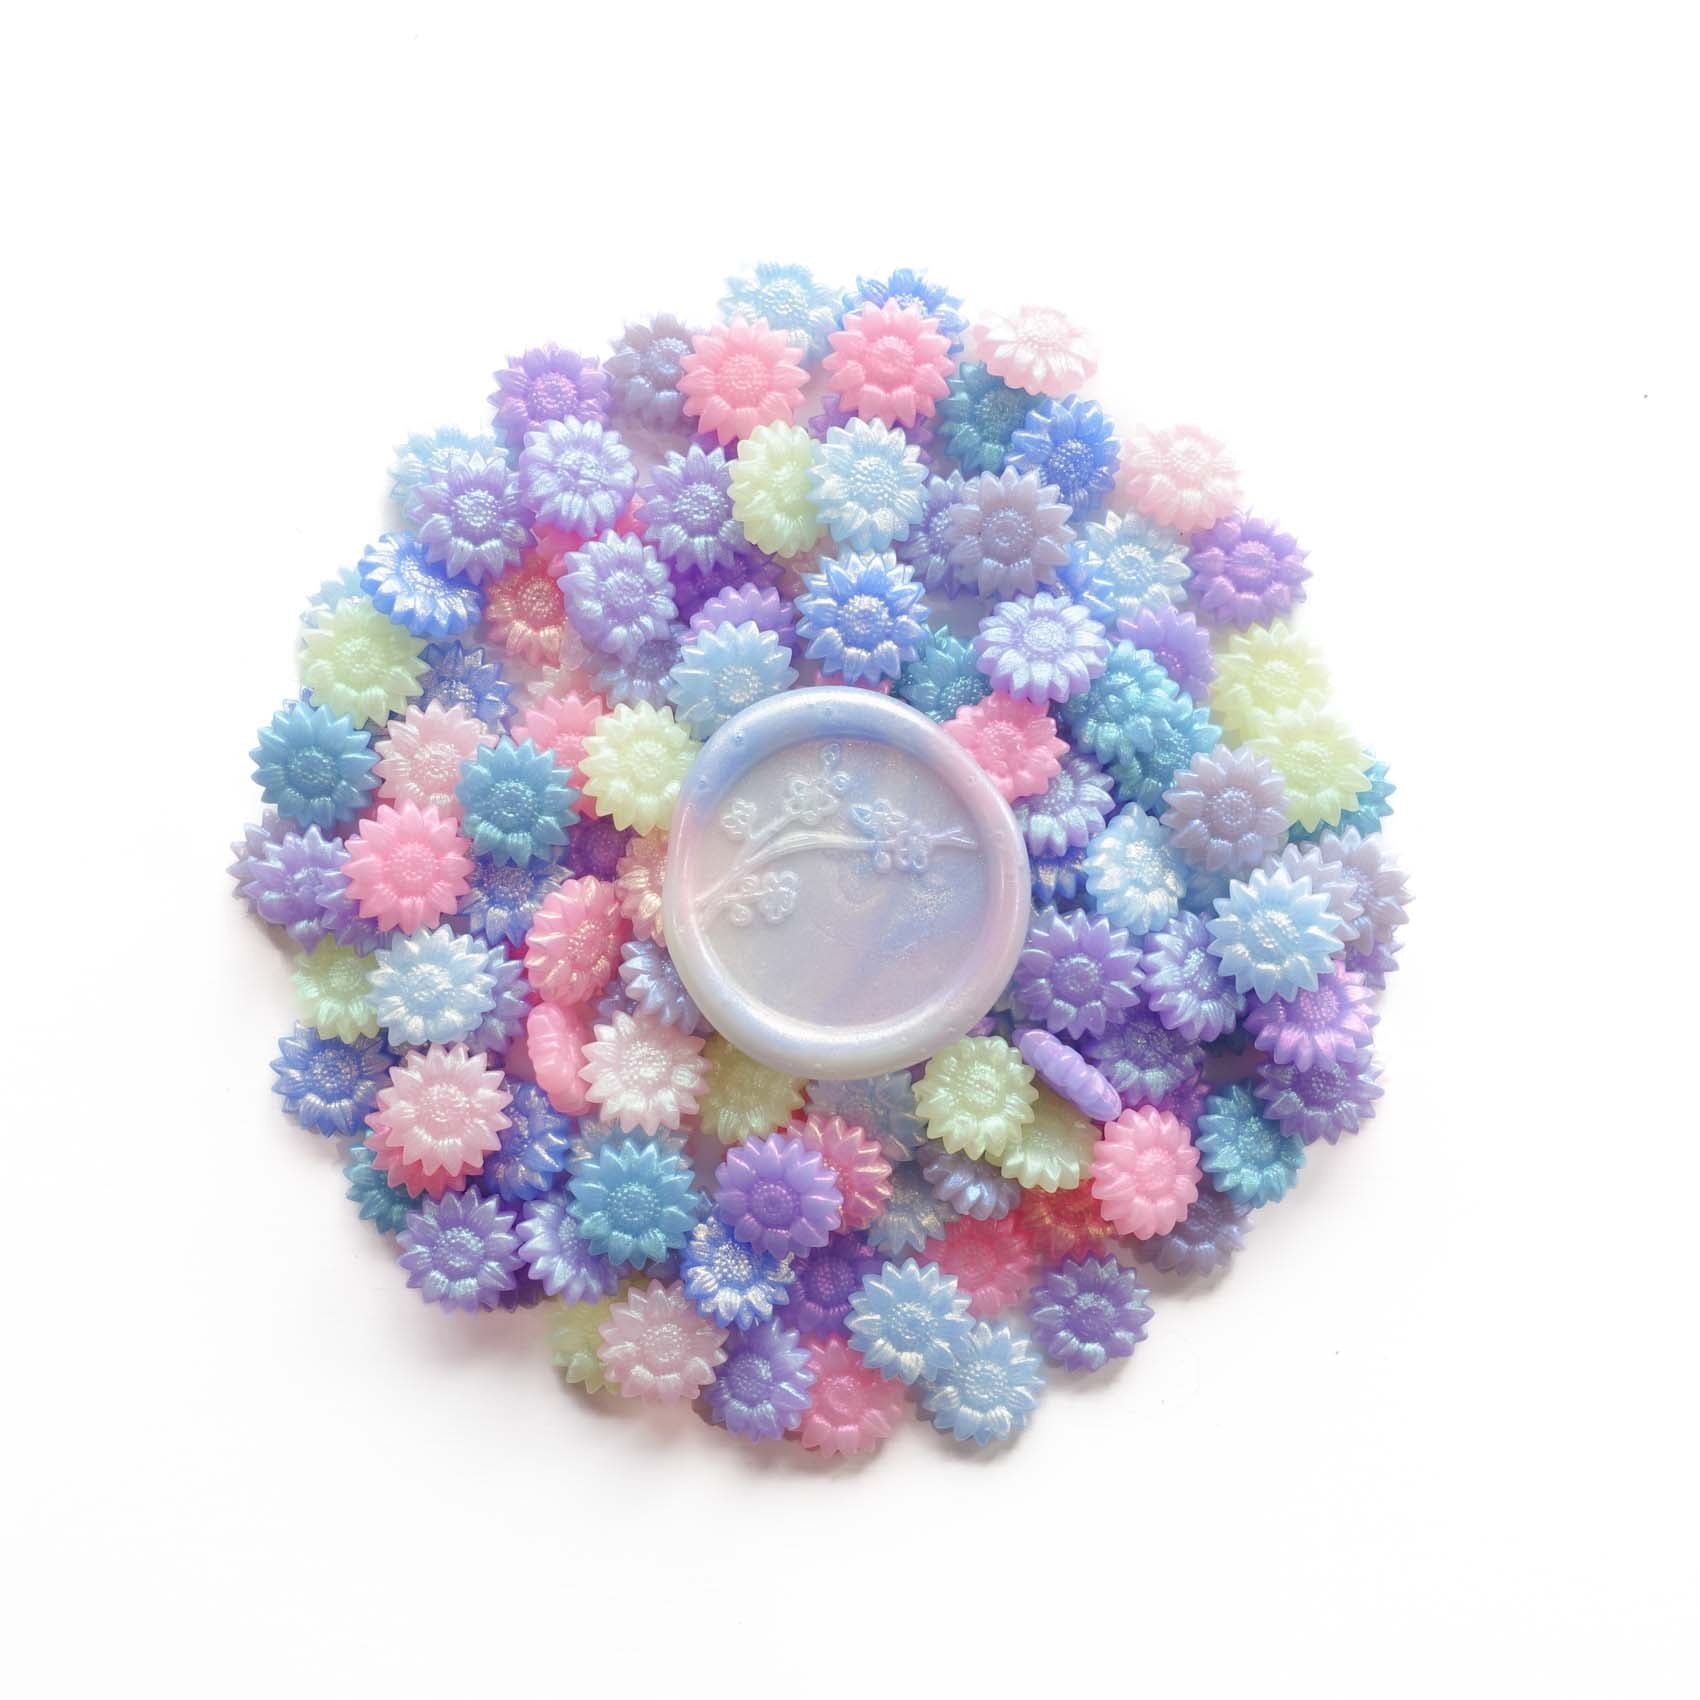 holographic sealing wax seal beads australia pastel mix